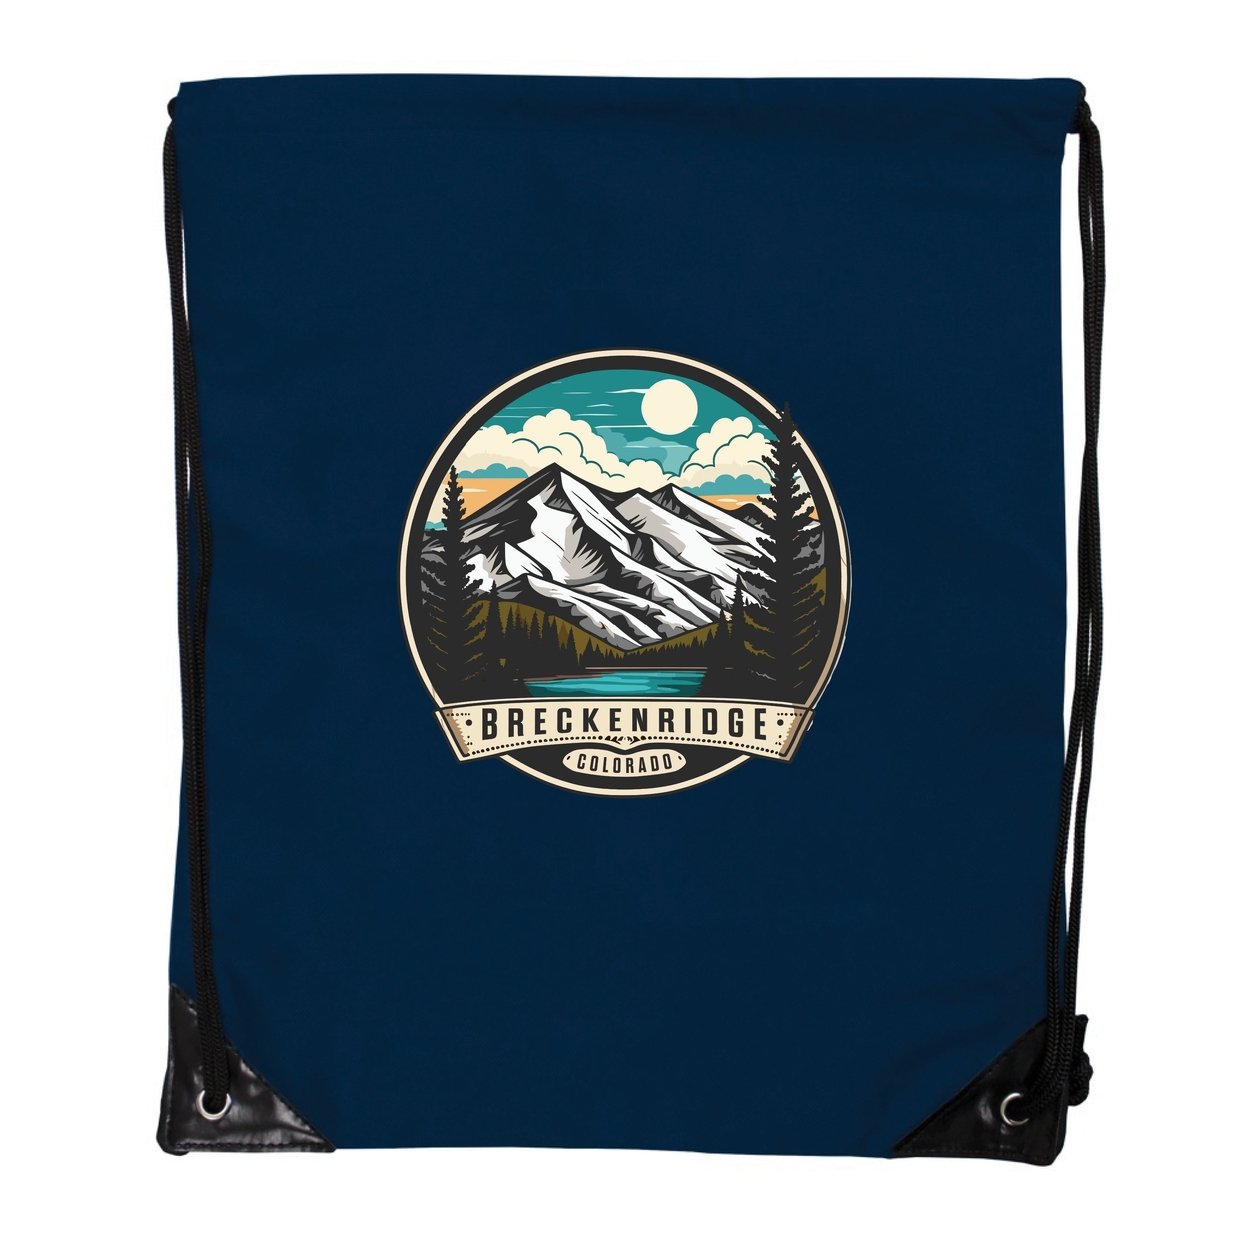 Breckenridge Colorado Design A Souvenir Cinch Bag With Drawstring Backpack Black - Navy